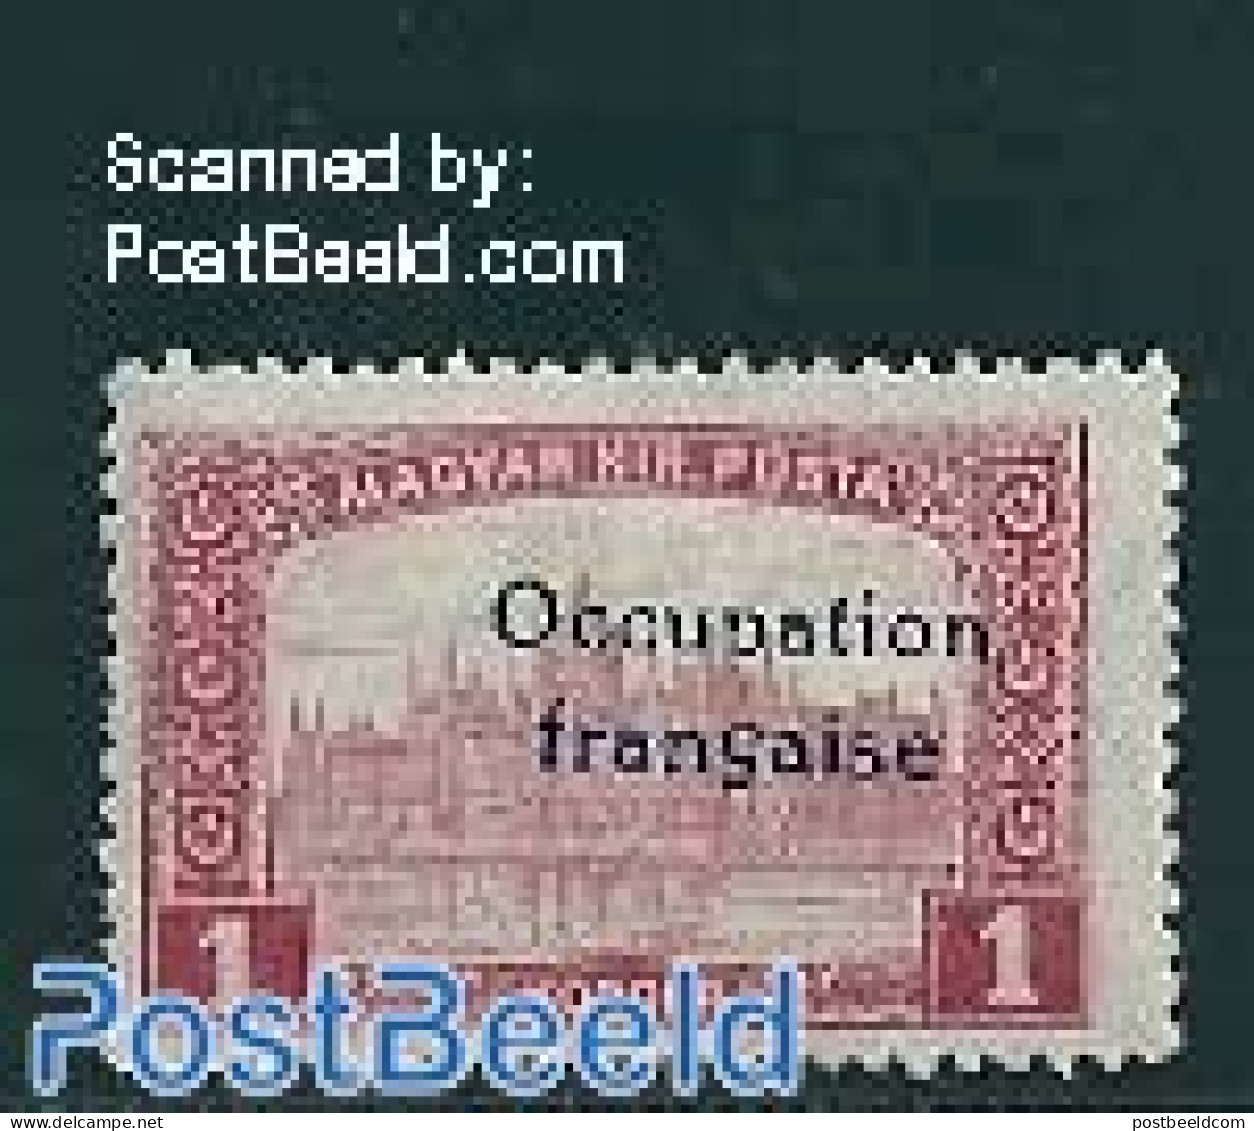 Hungary 1919 Arad, 1Kr, Stamp Out Of Set, Unused (hinged) - Ungebraucht